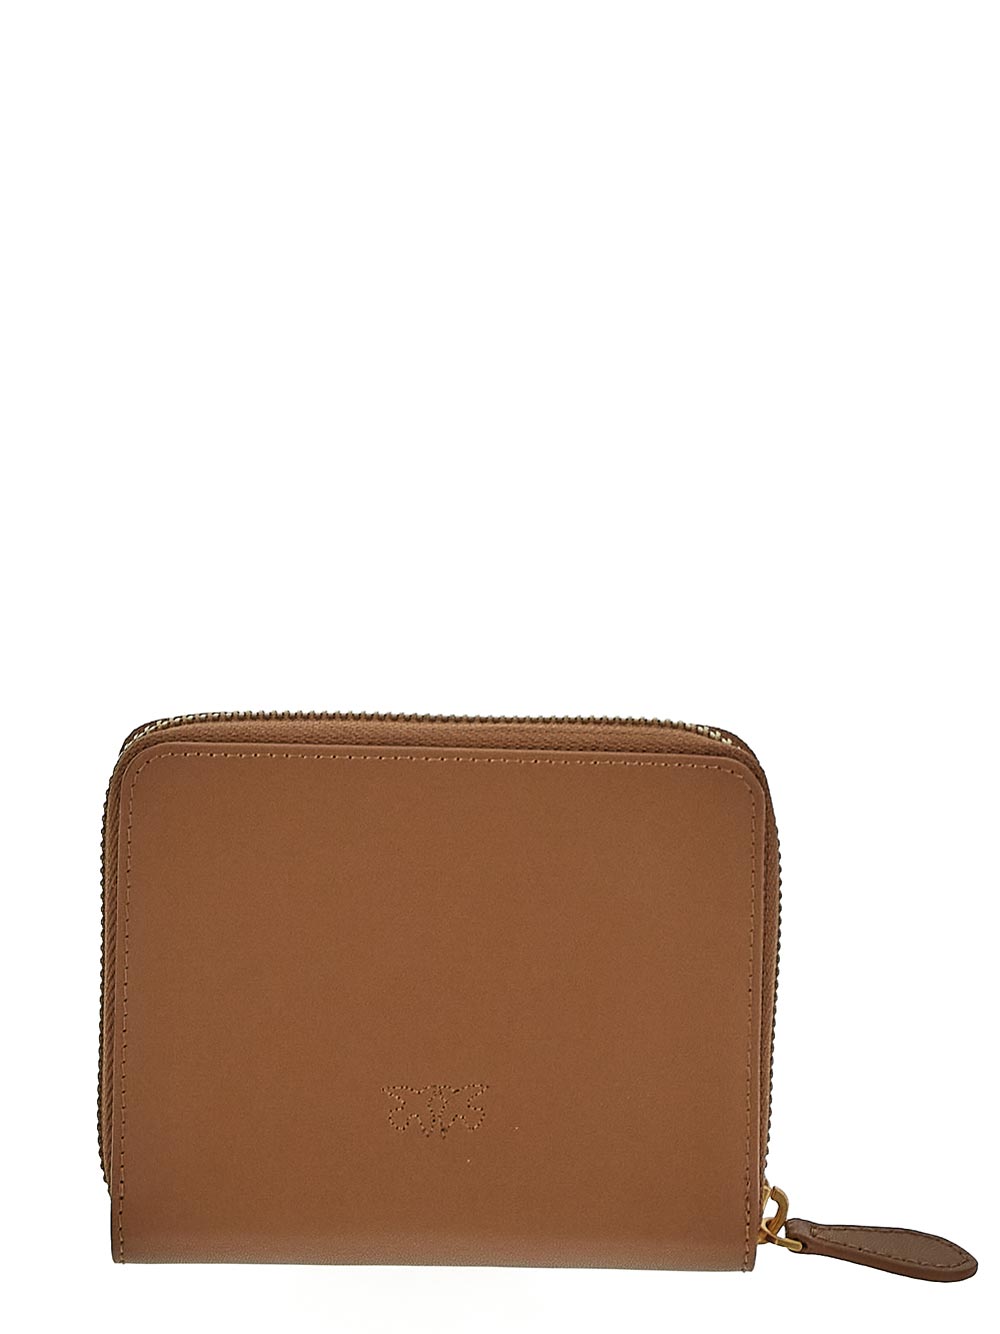 Pinko Square Zip-Around Leather Wallet